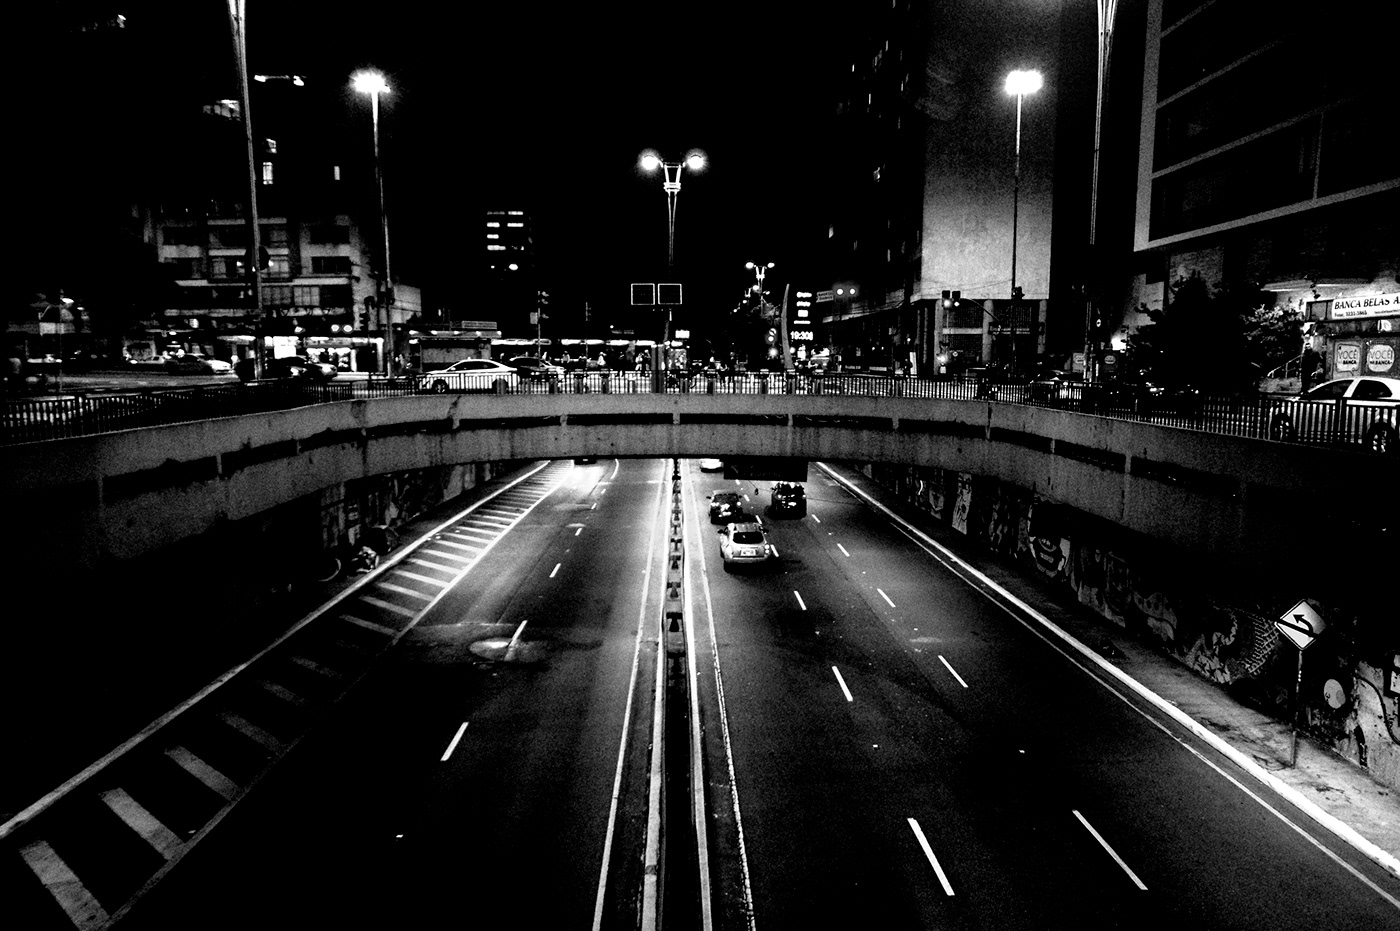 #pentaxk3ii black and white city nightcity nightphotography photographer Photography  portrait street photography Urban